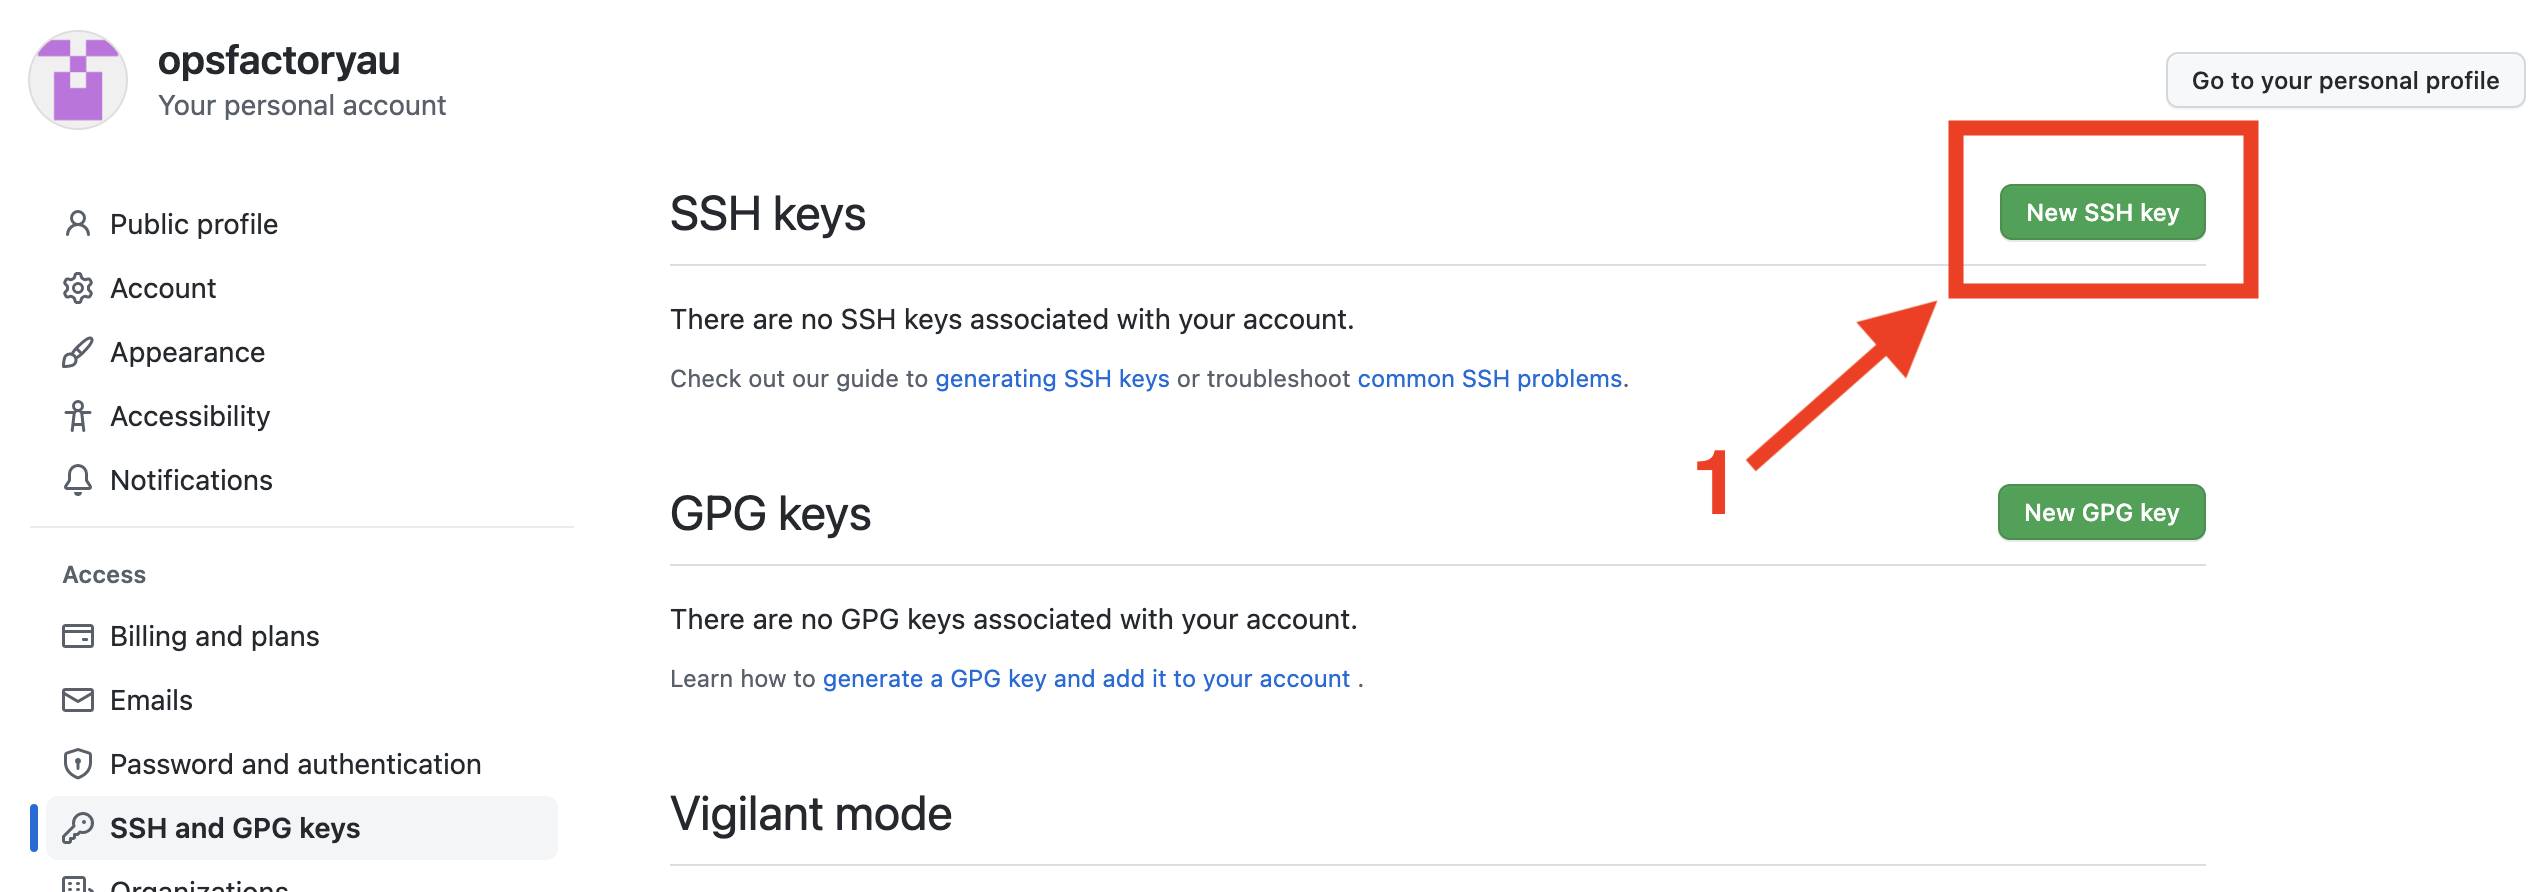 GitHub Settings - SSH Keys - Add